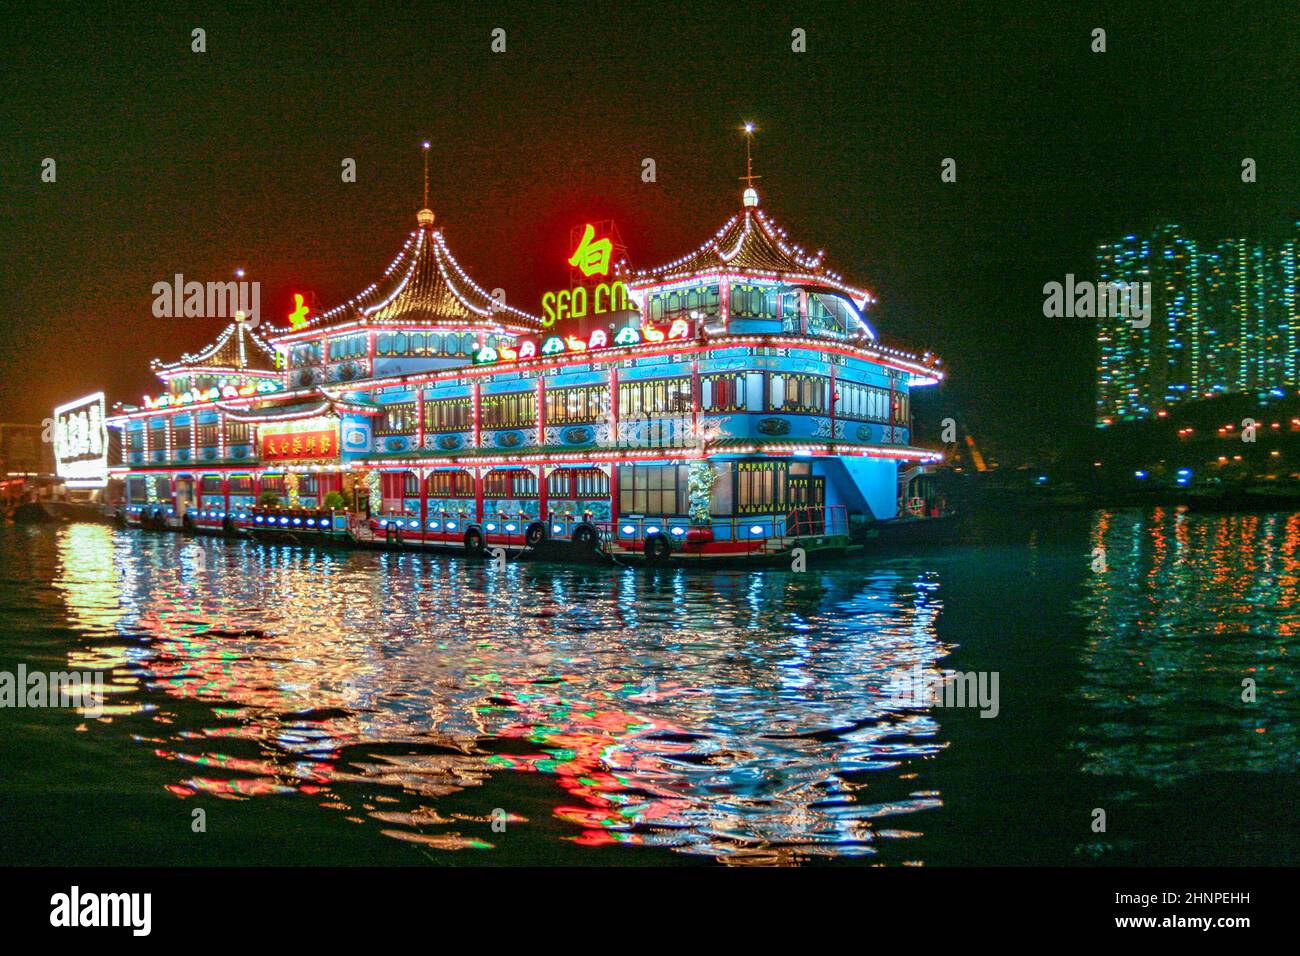 The world-famous Floating Restaurant Jumbo in Aberdeen, Hong Kong. Stock Photo